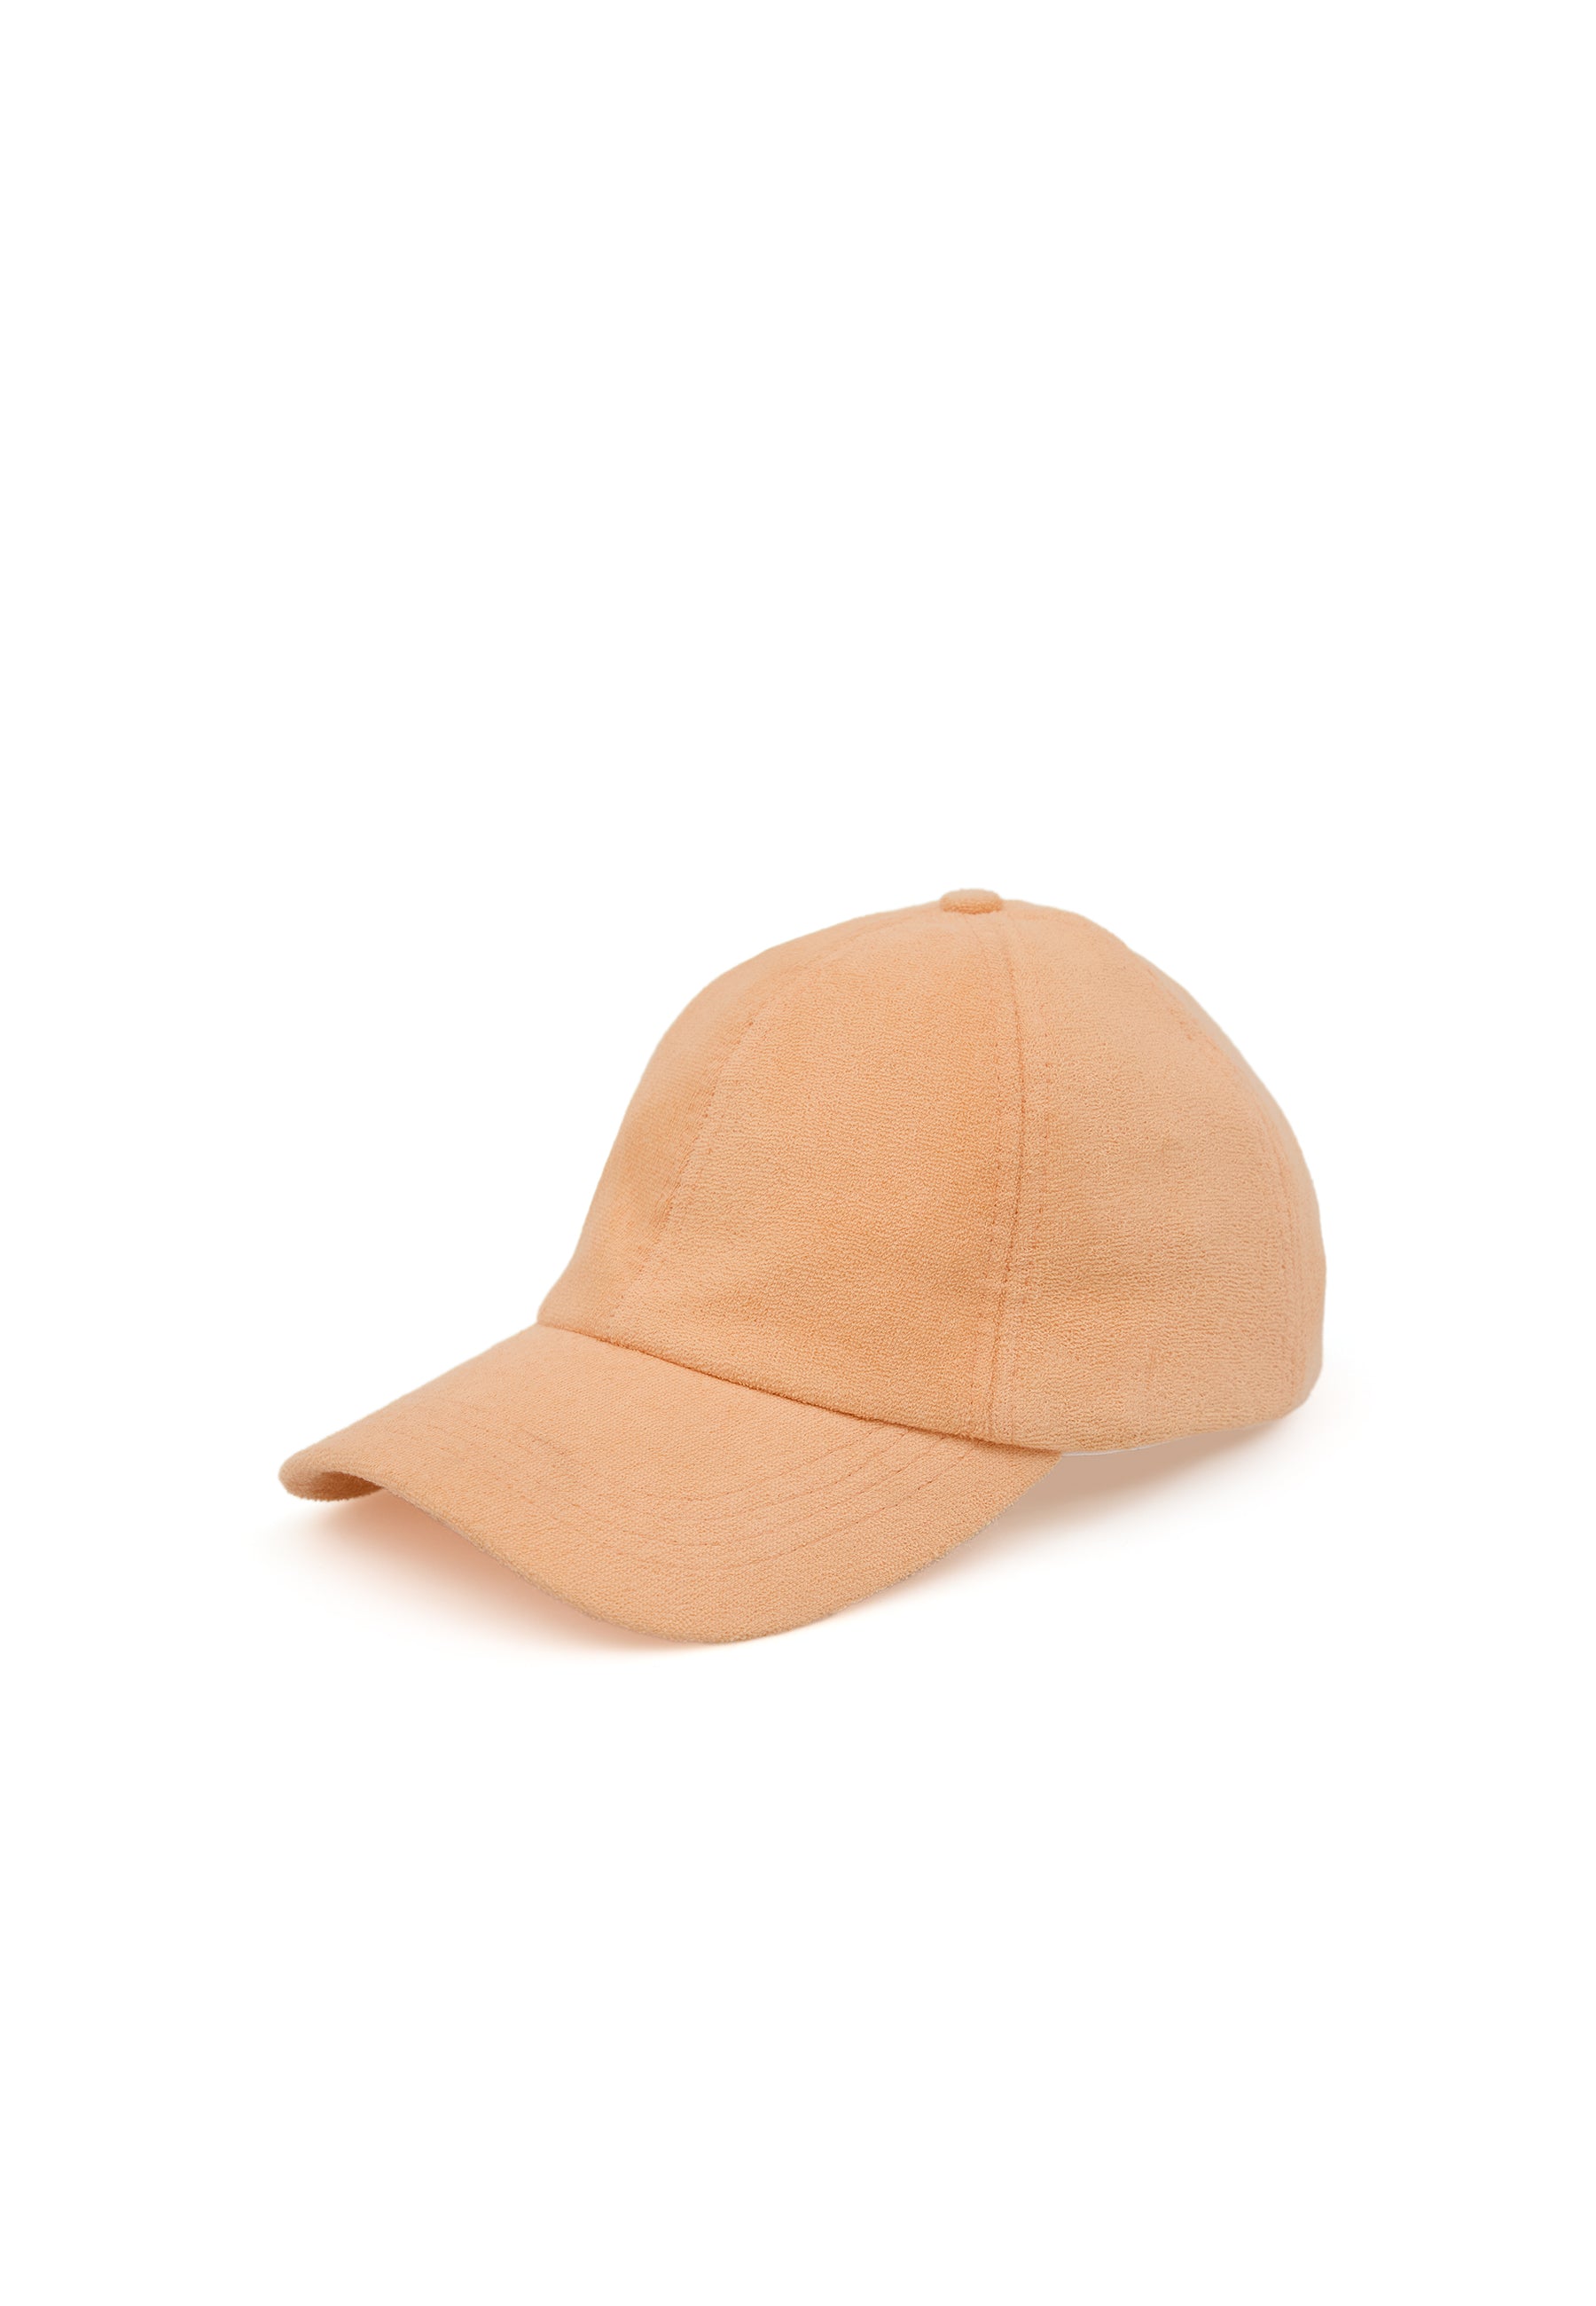 WMTOWEL CAP in Apricot Wash